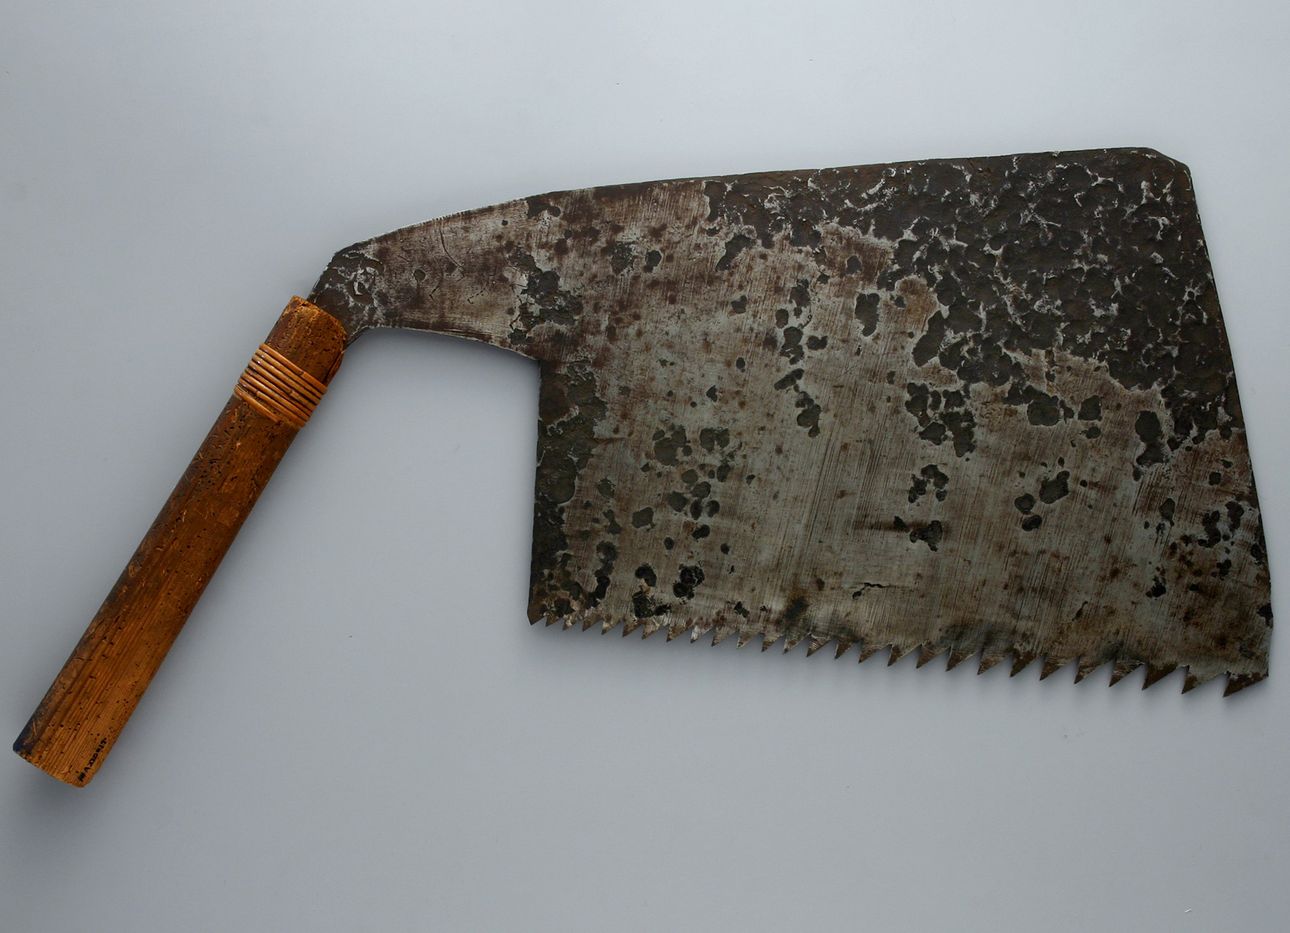 A wide-blade rip saw.